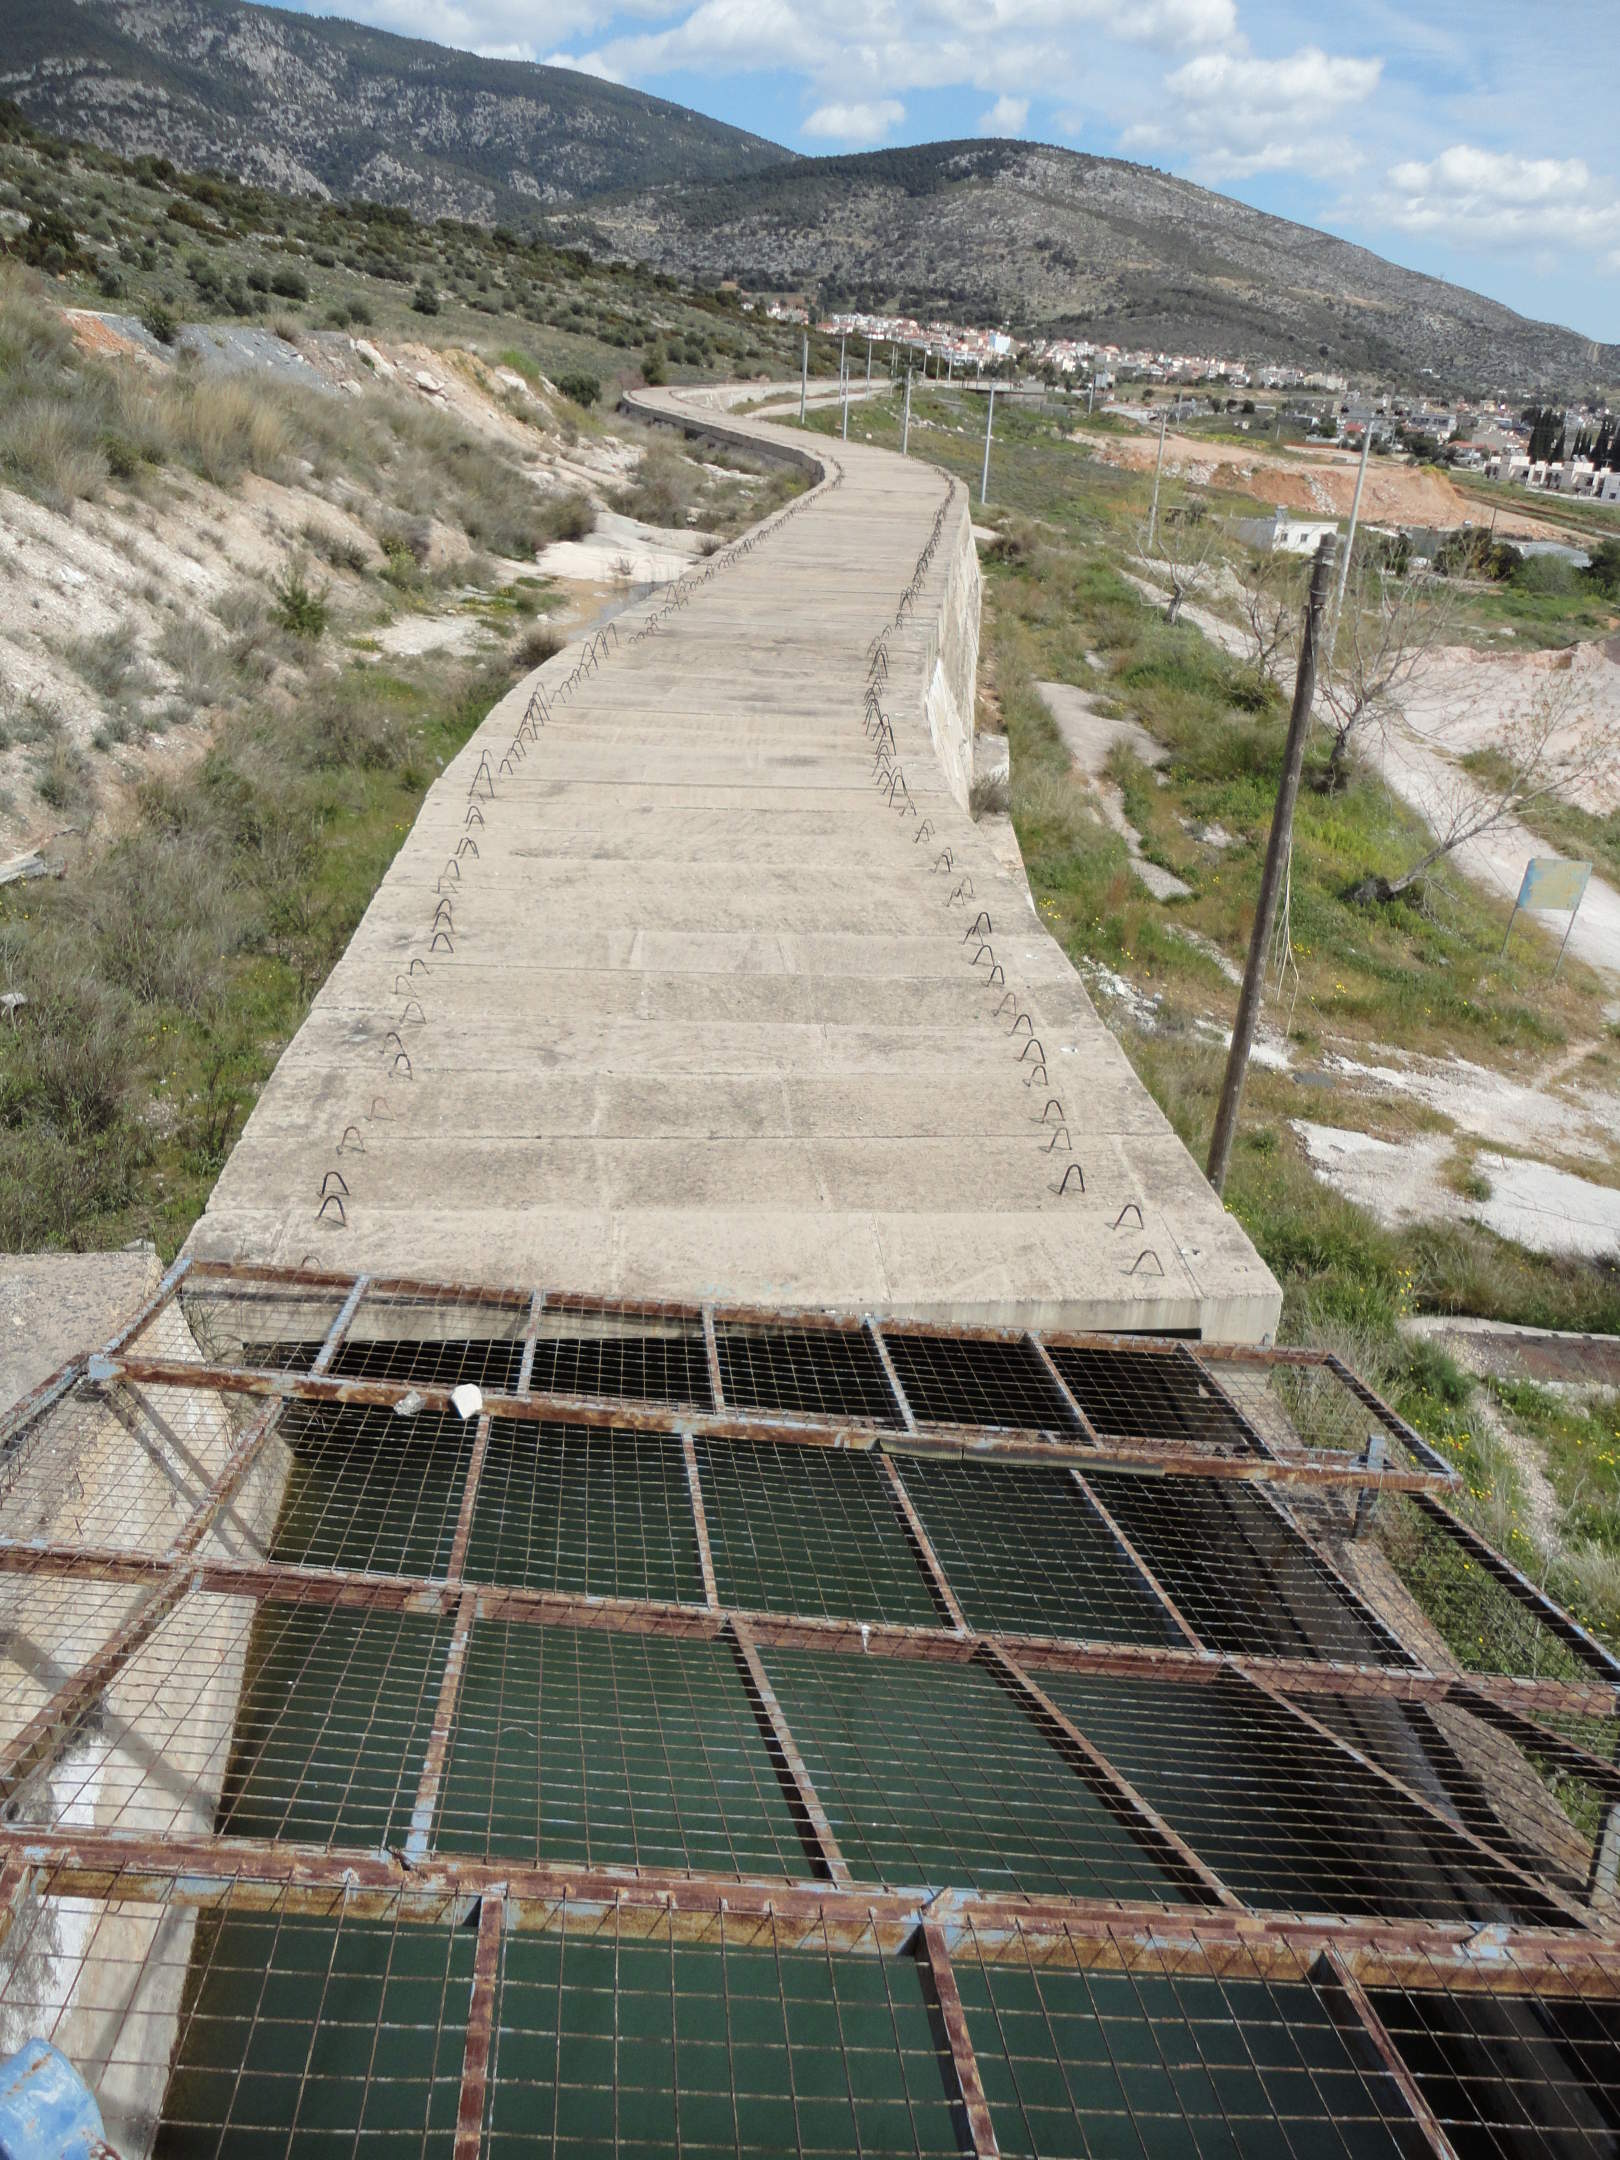 Abb. 6 Der Wasserkanal in Ano Liosia Mai 2014 (Quelle: eigenes Foto)